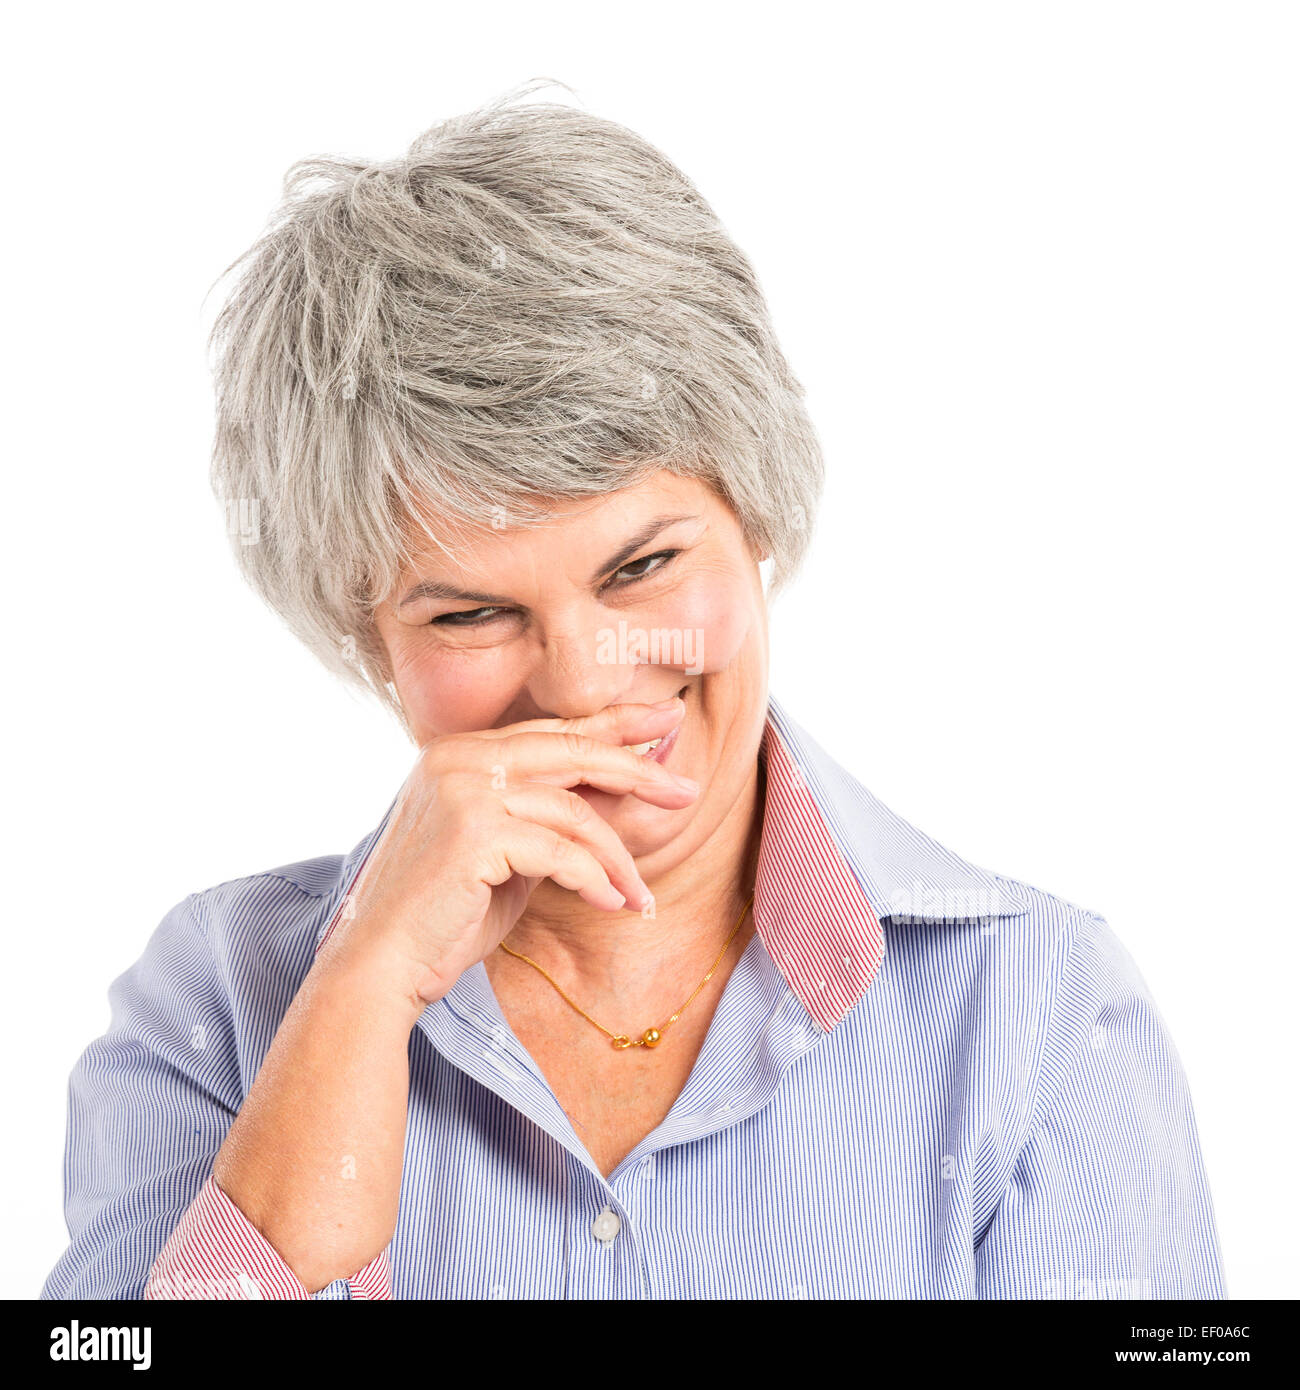 Portrait of a woman laughing Banque D'Images